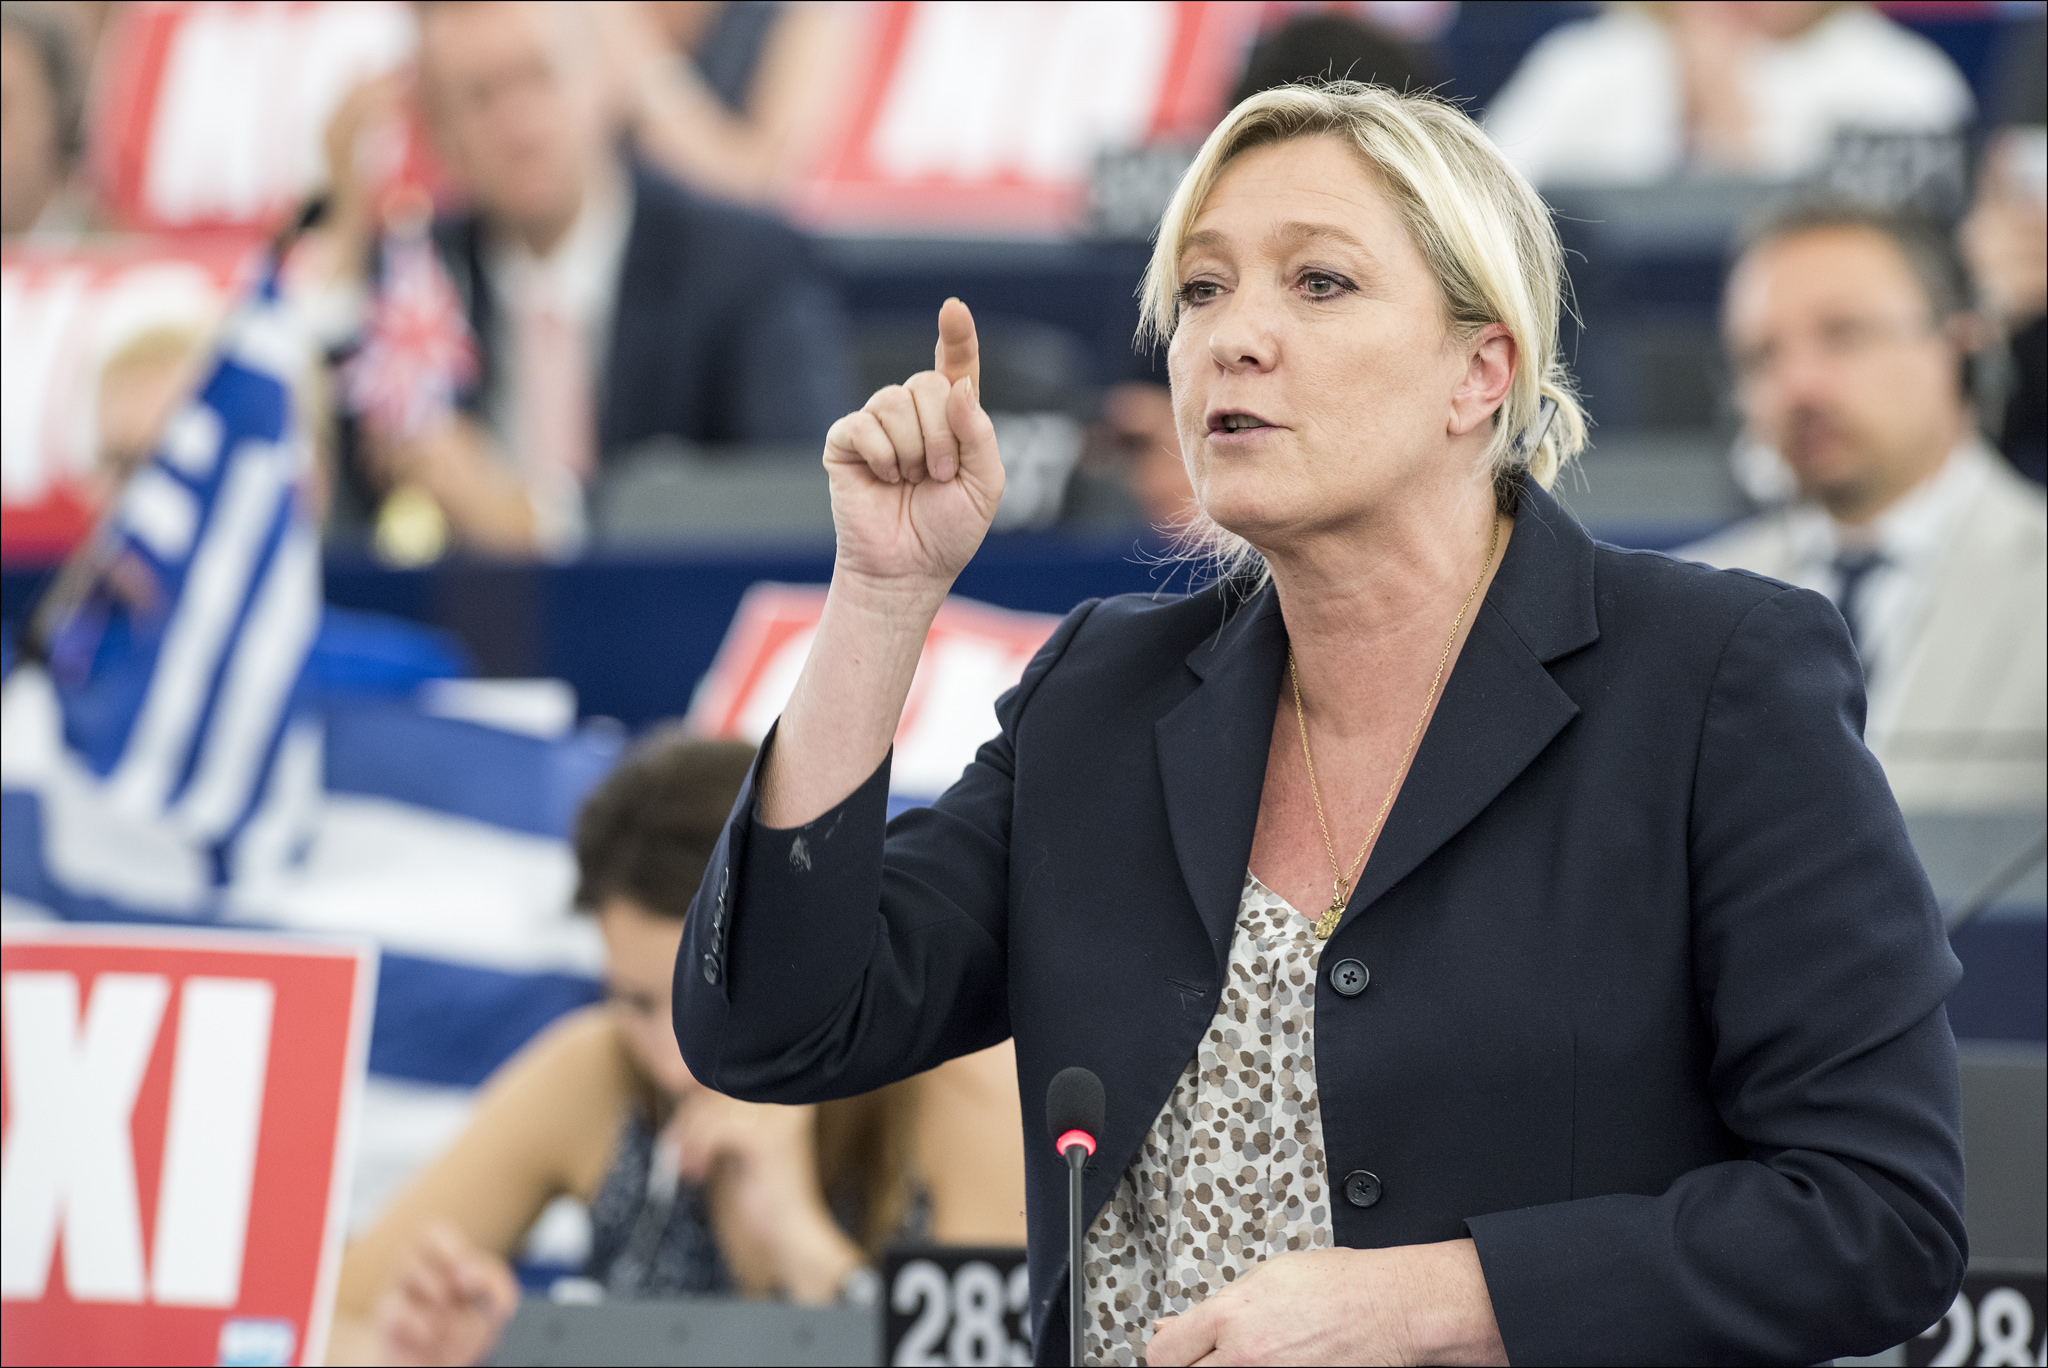 Le Pen European Union 2015 European Parliament www.flickr.com photos european parliament 19334069189